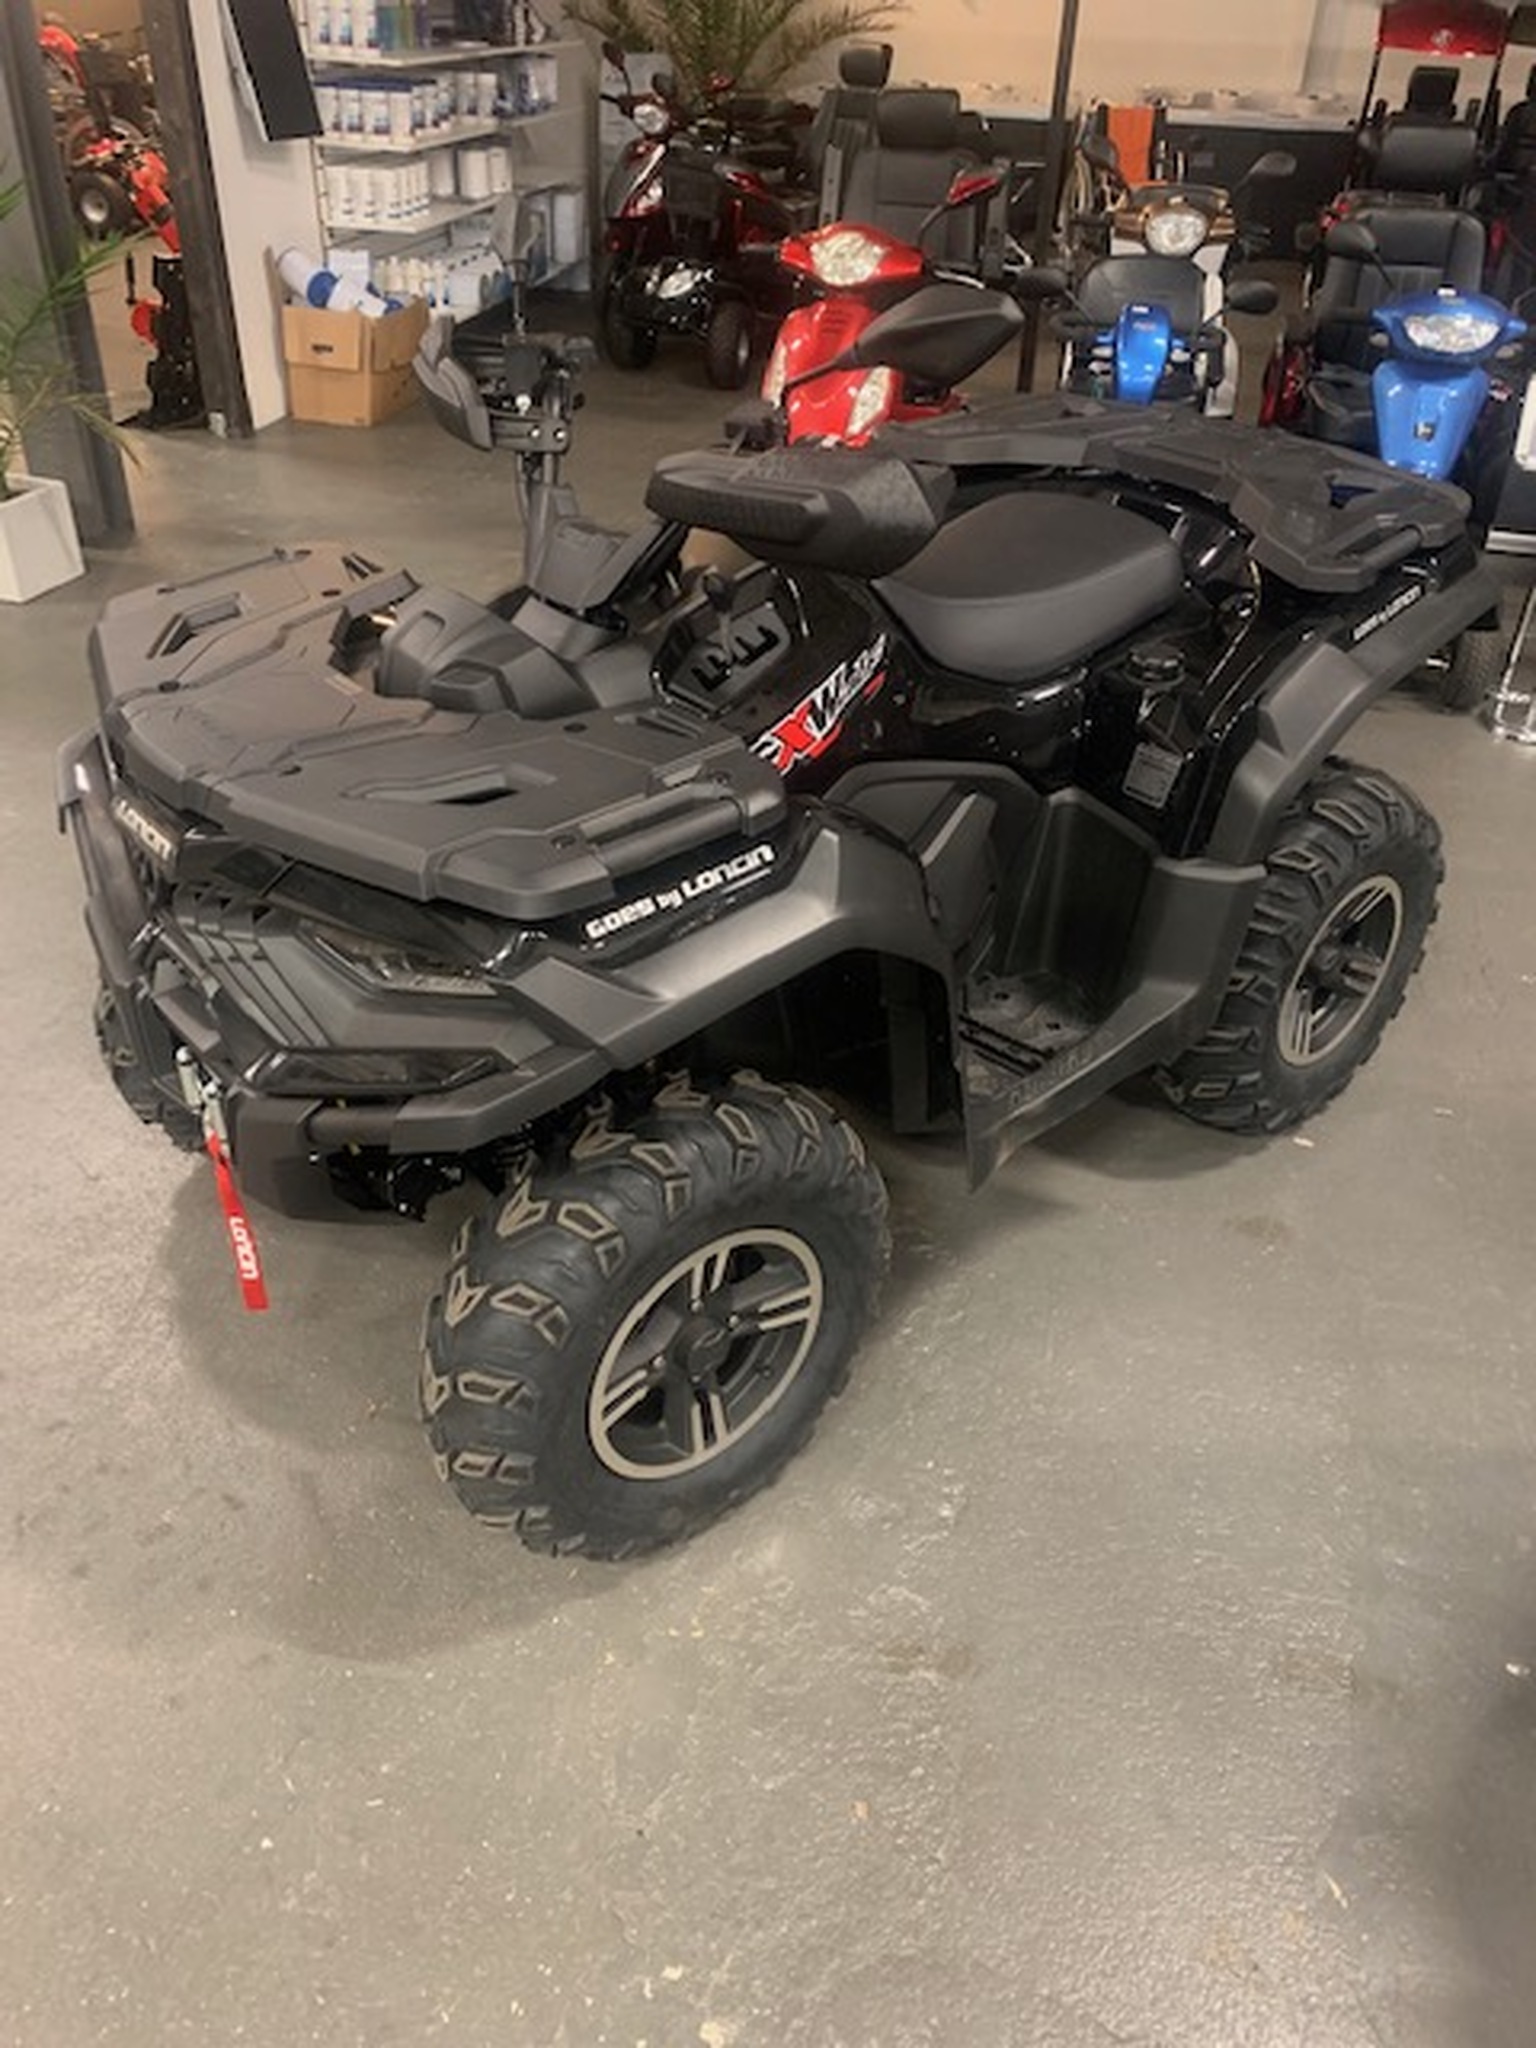 Goes Xwolf 700 ATV, fyrhjuling